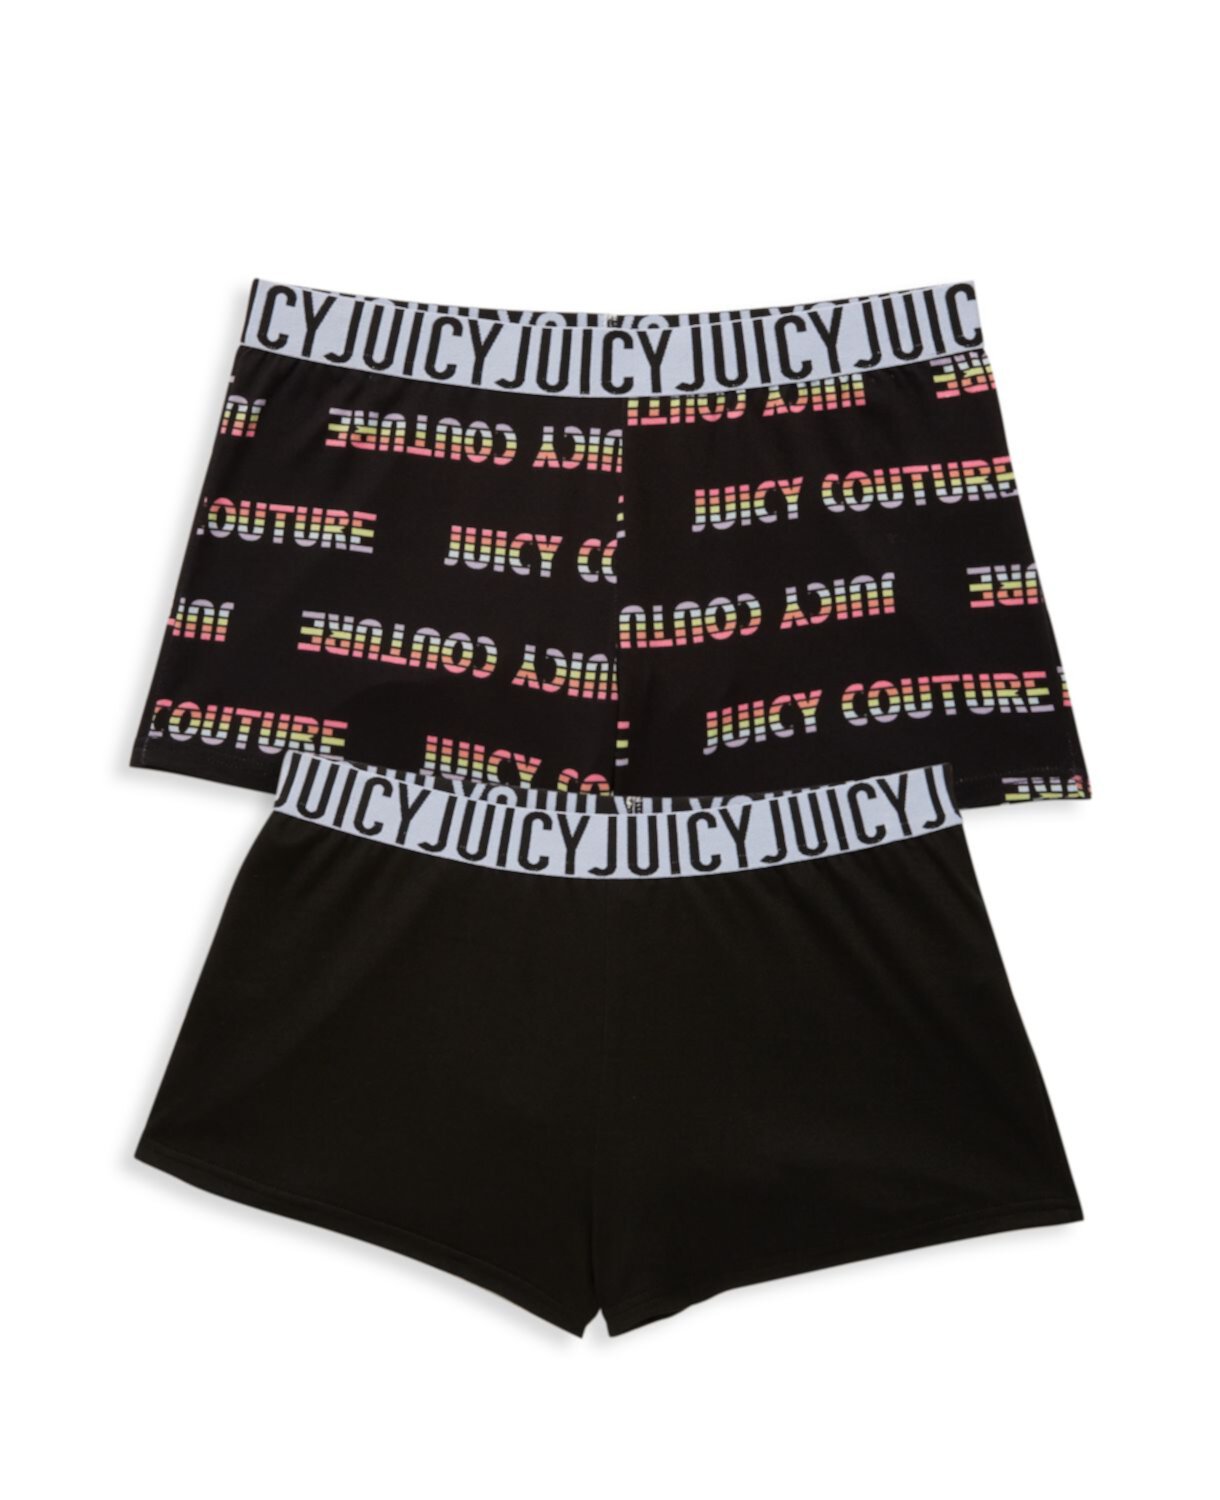 2 шт. шорты с логотипом Juicy Couture